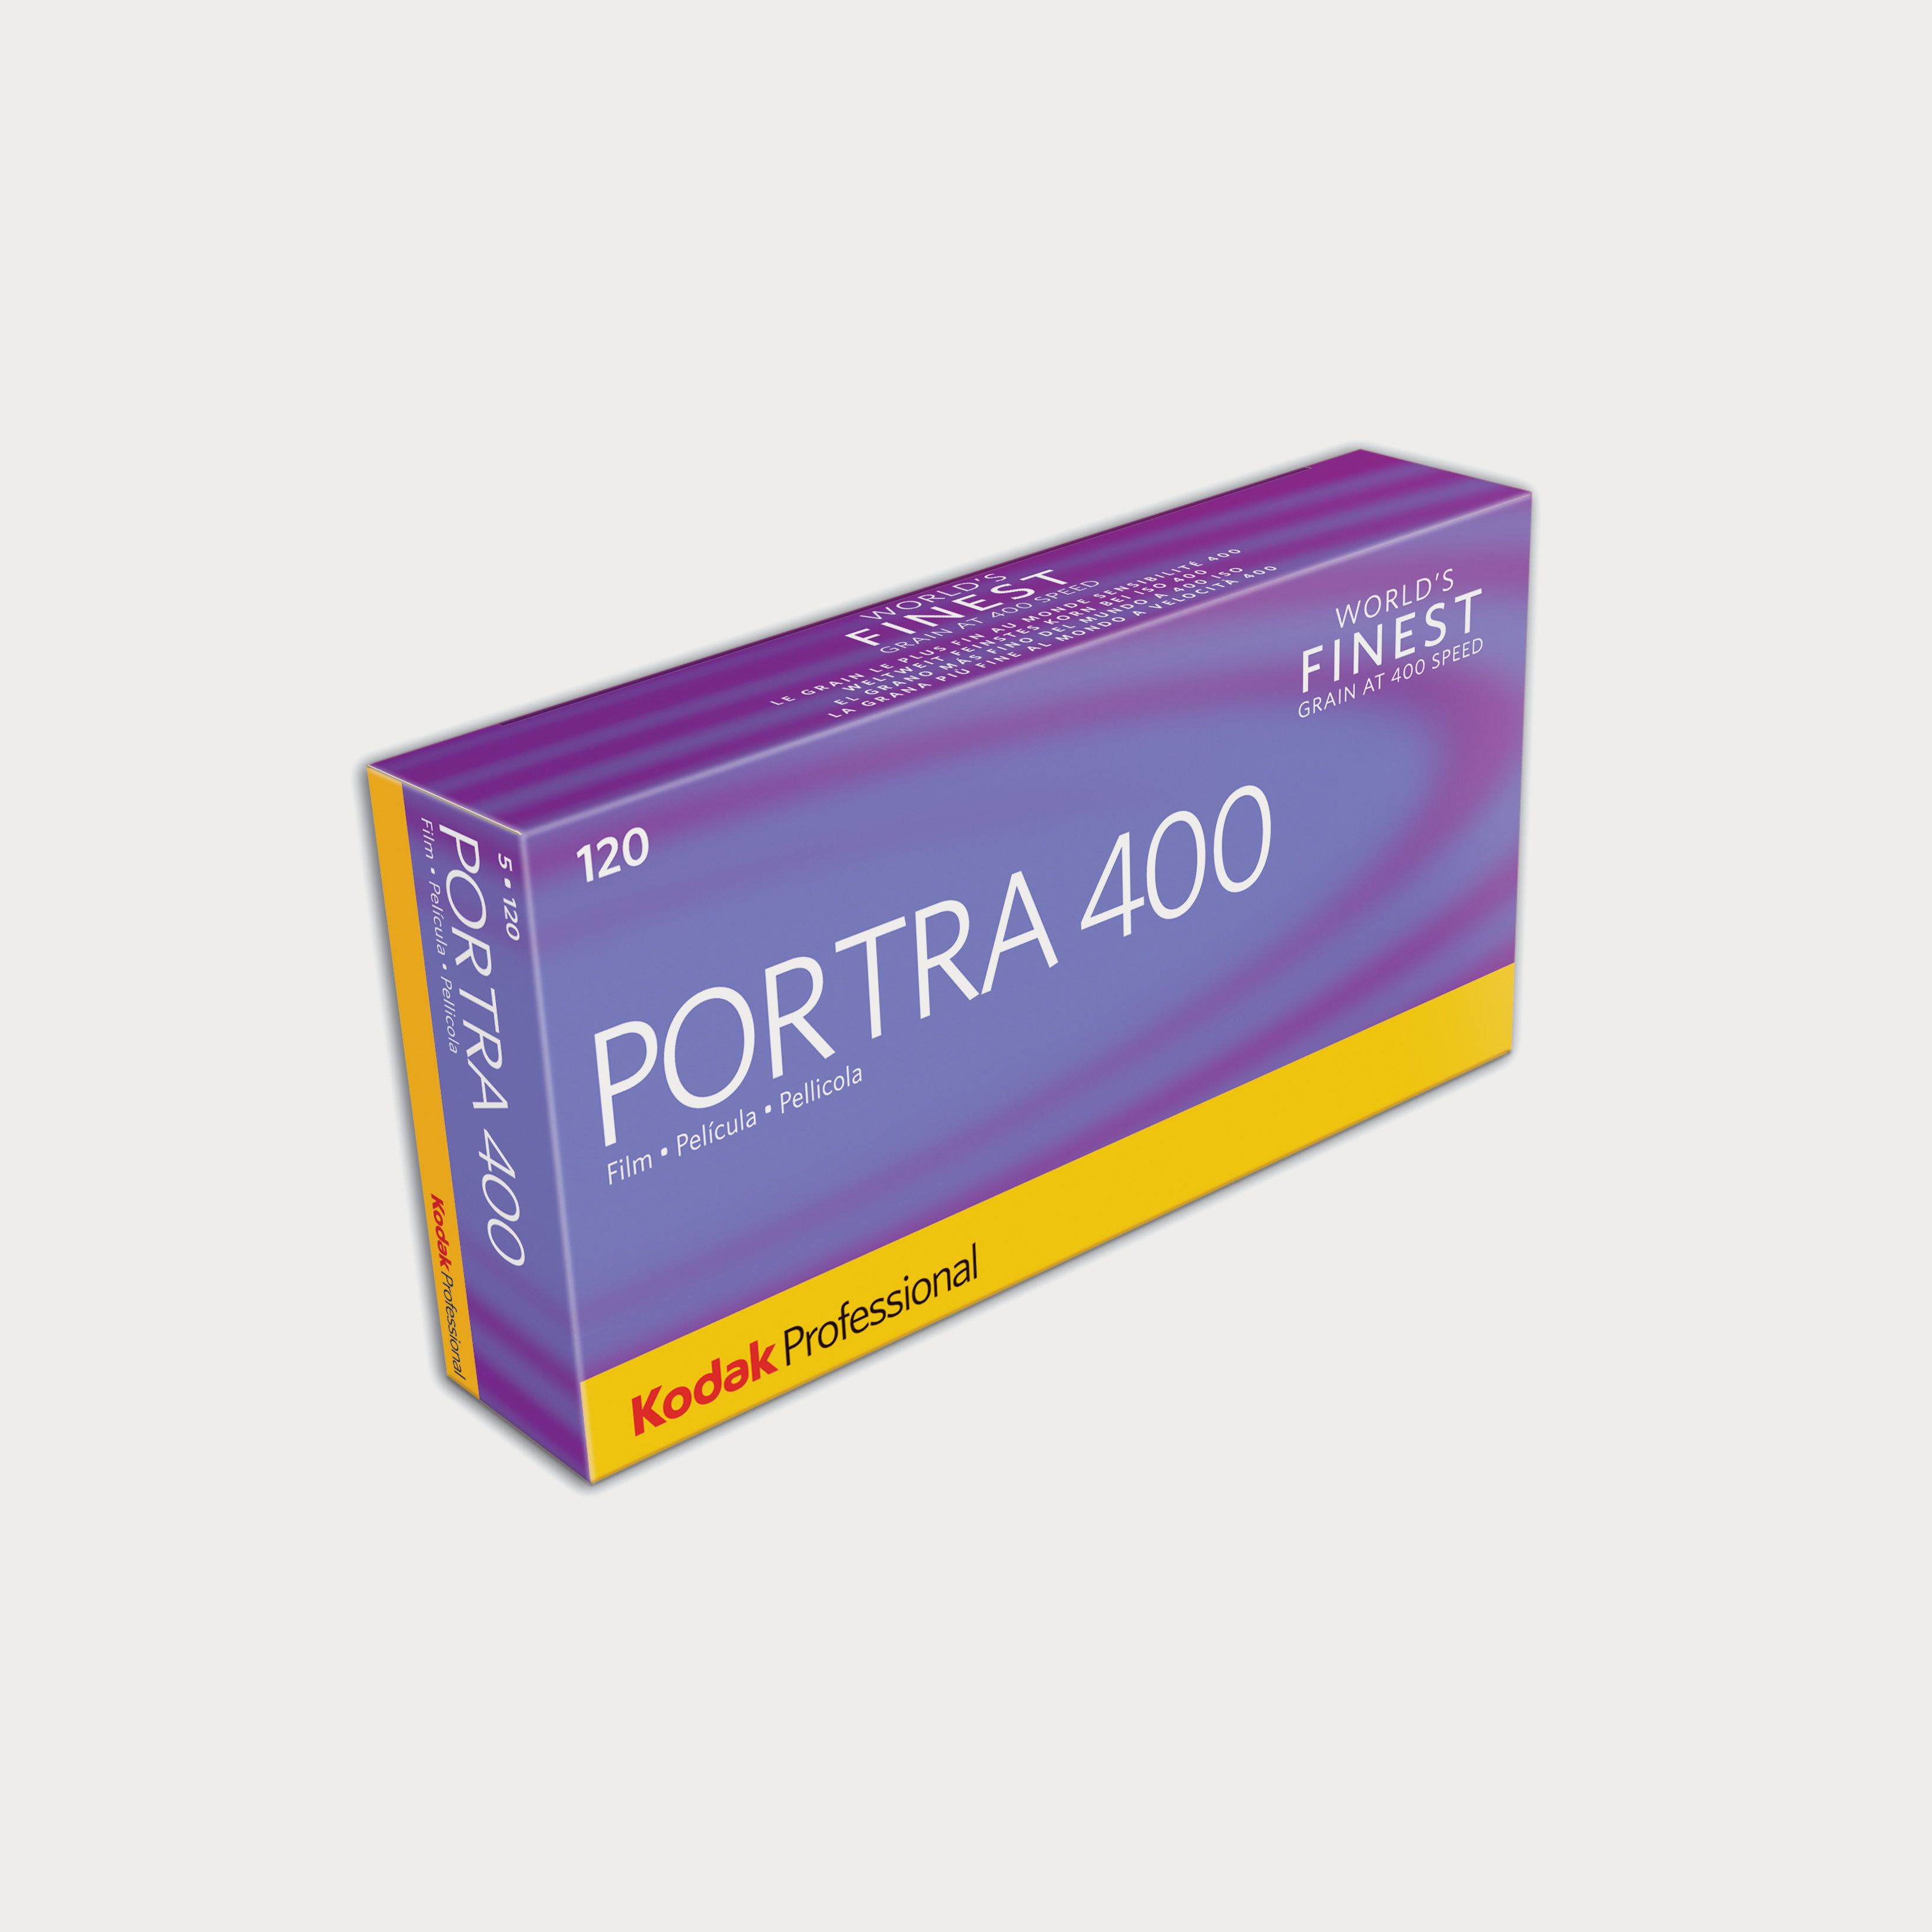 Kodak Professional Portra 400 Color Negative 120 Film - 5 Rolls